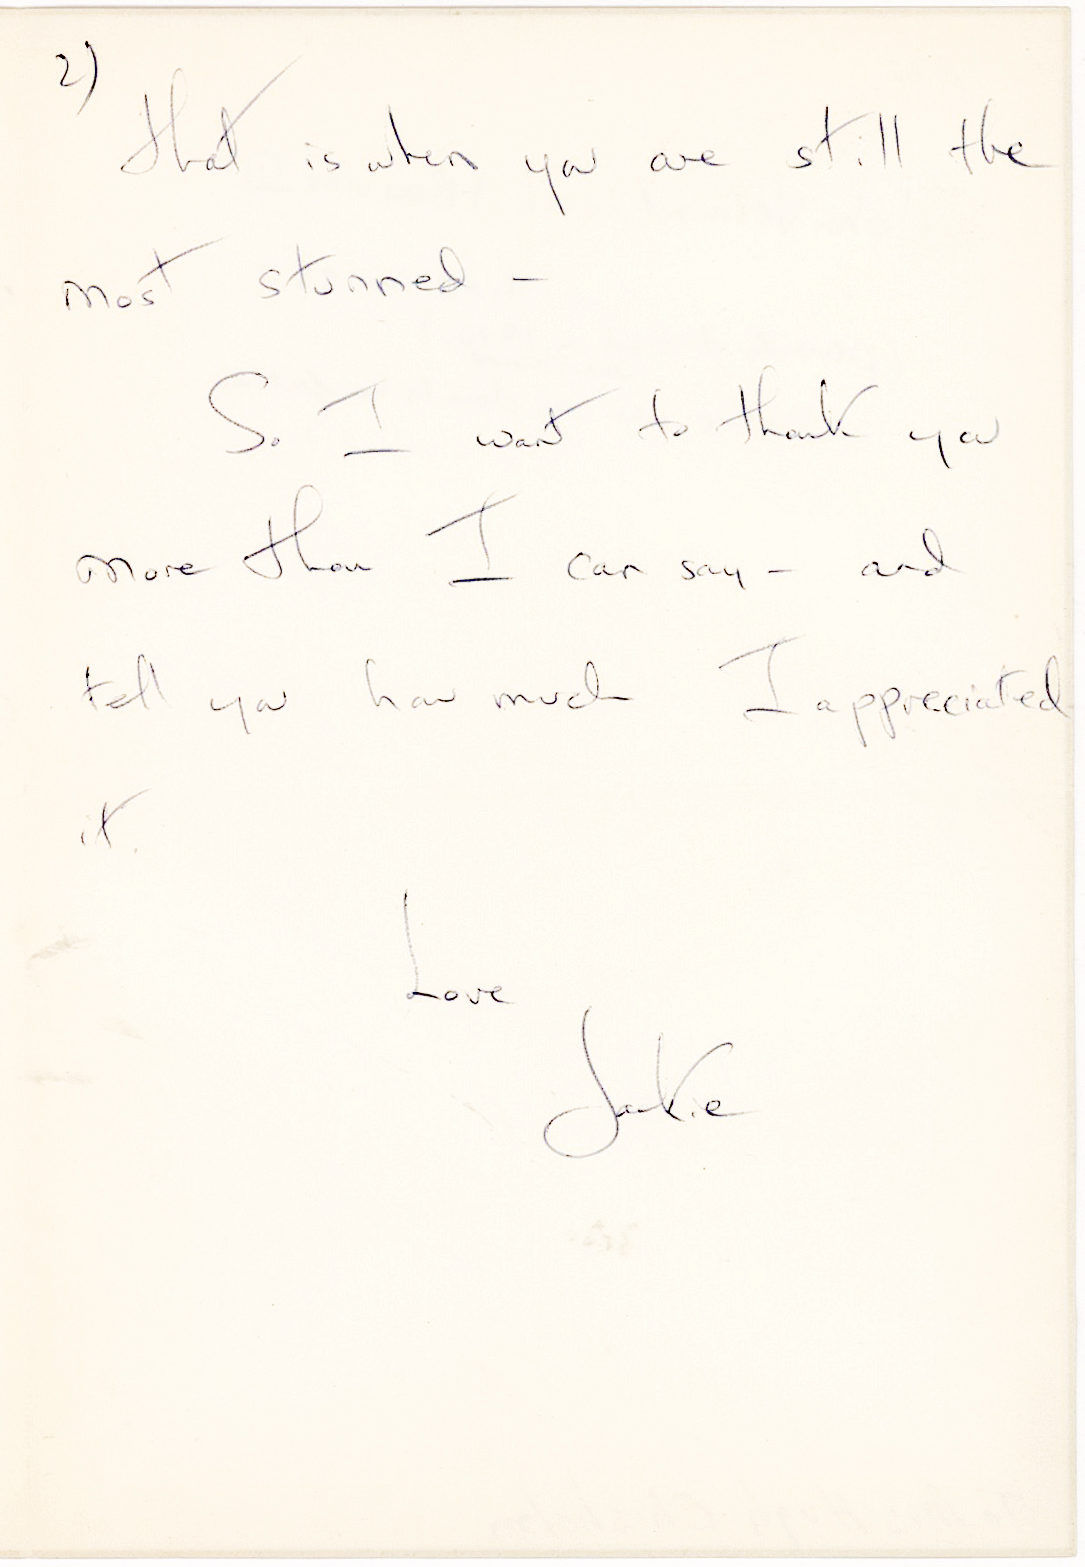 Jackie Kennedy Letter